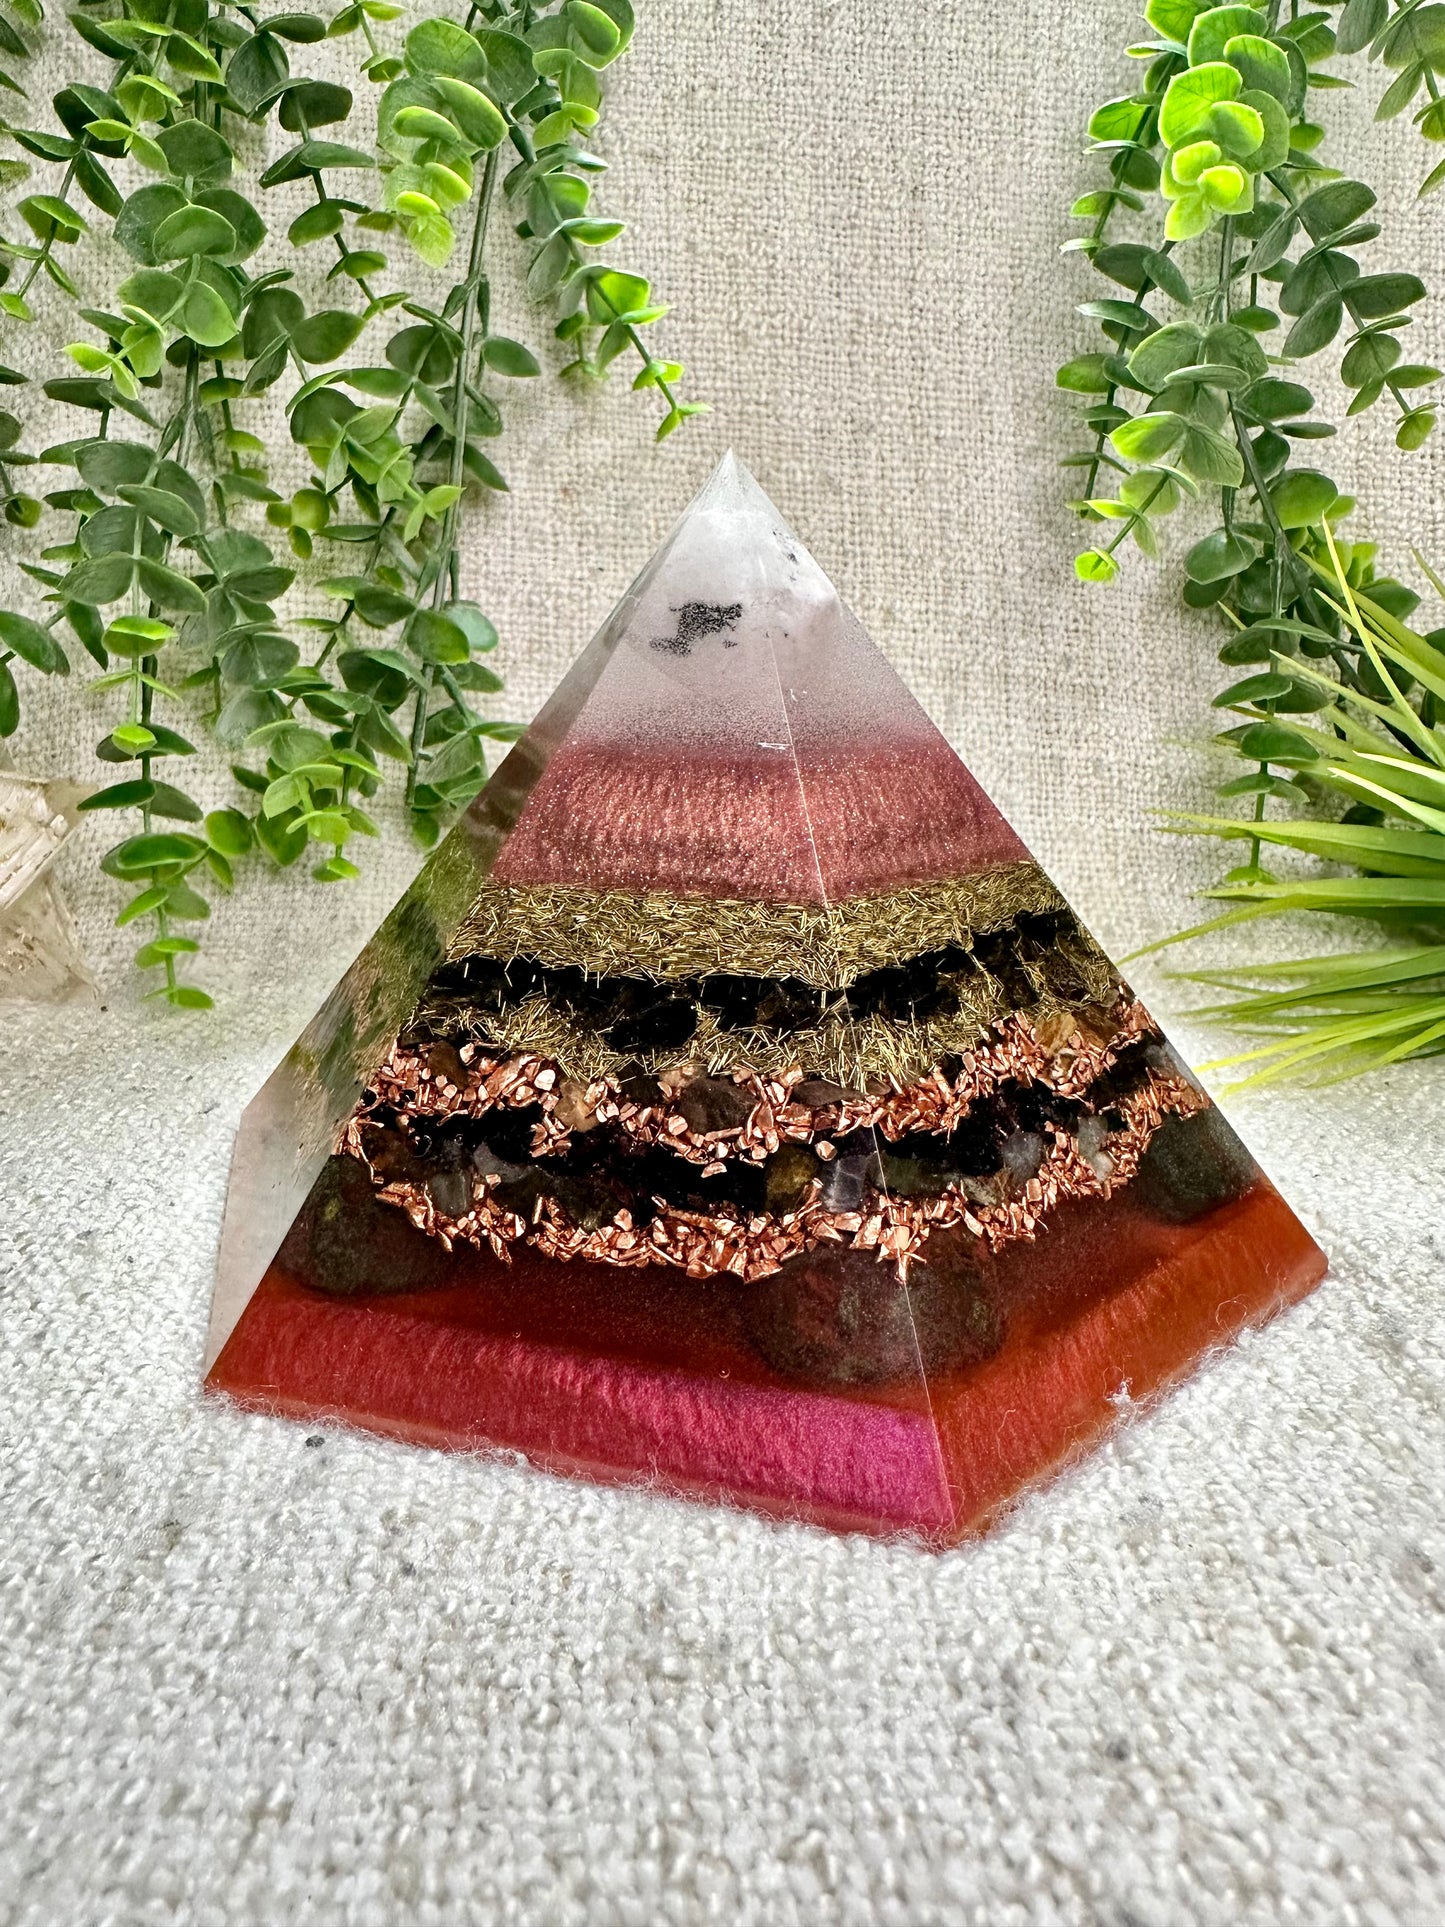 FALL EQUINOX - Special Edition Hexagonal Pyramid! - EMF Protector - Moonstone, Smoky Quartz, Garnet, Labradorite, Dragon Blood Jasper, with Brass and Copper Metals